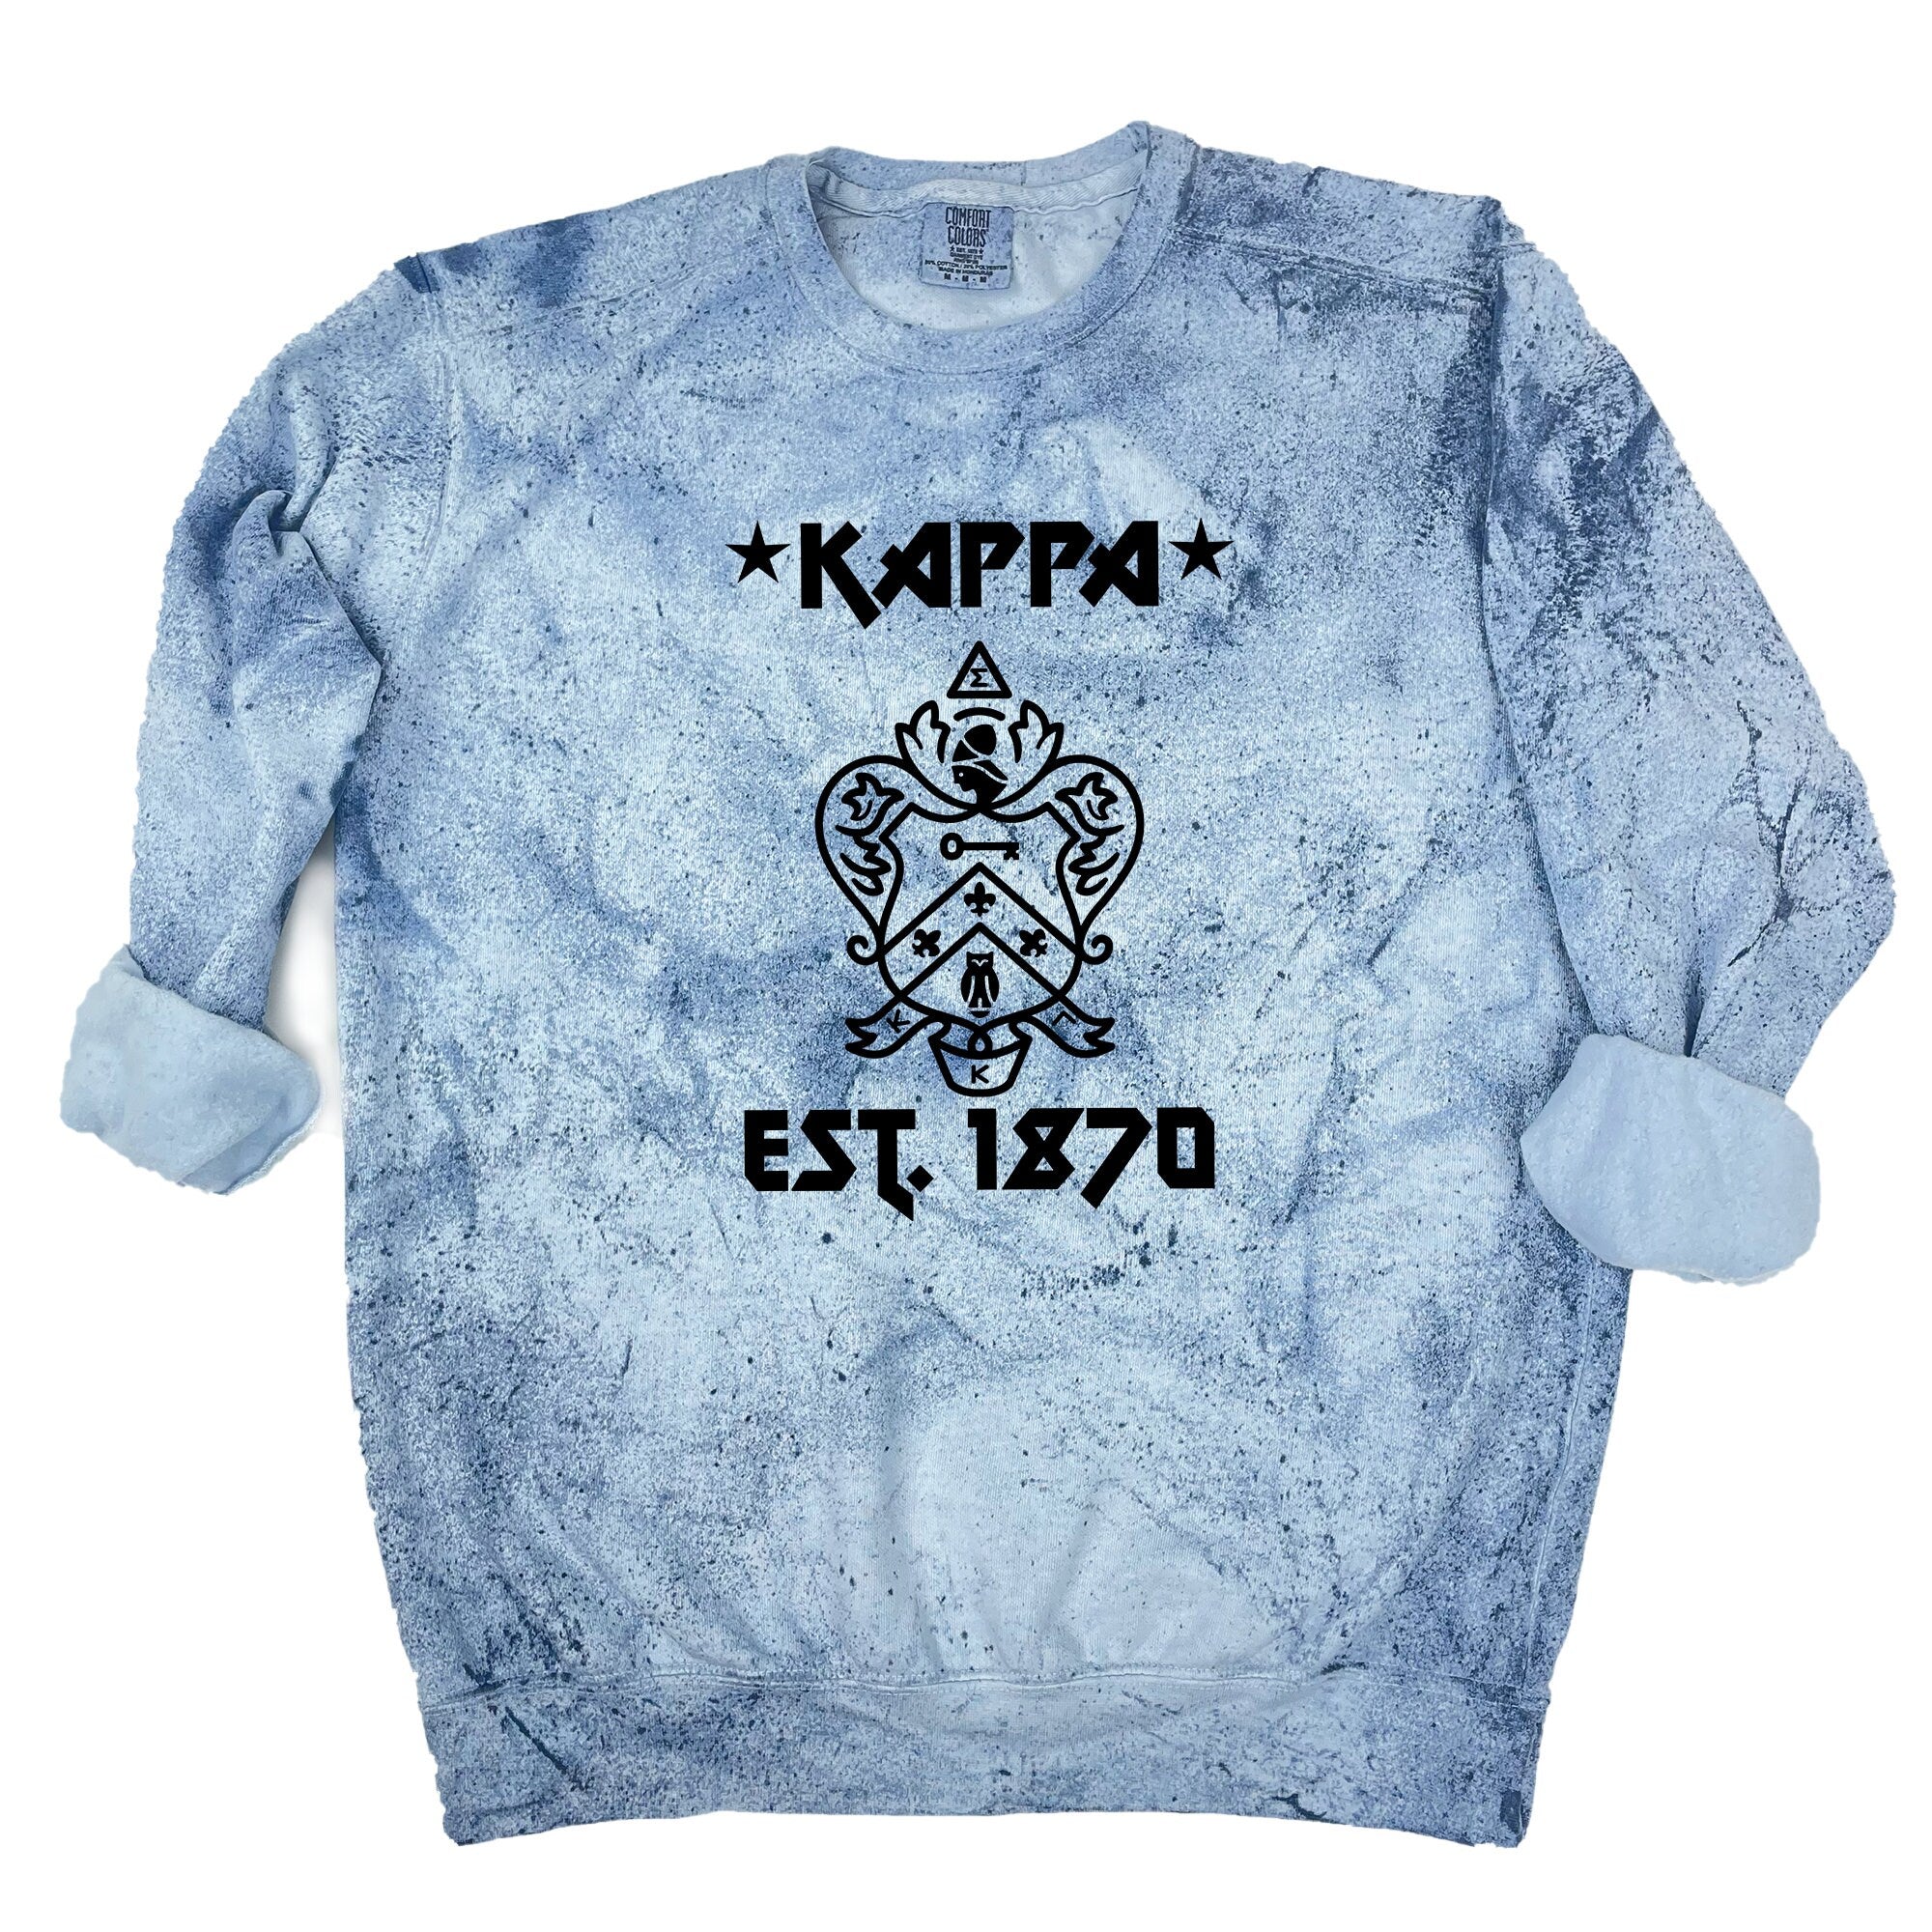 Kappa Kappa Gamma Vintage Band Sweatshirt – Go Greek Chic